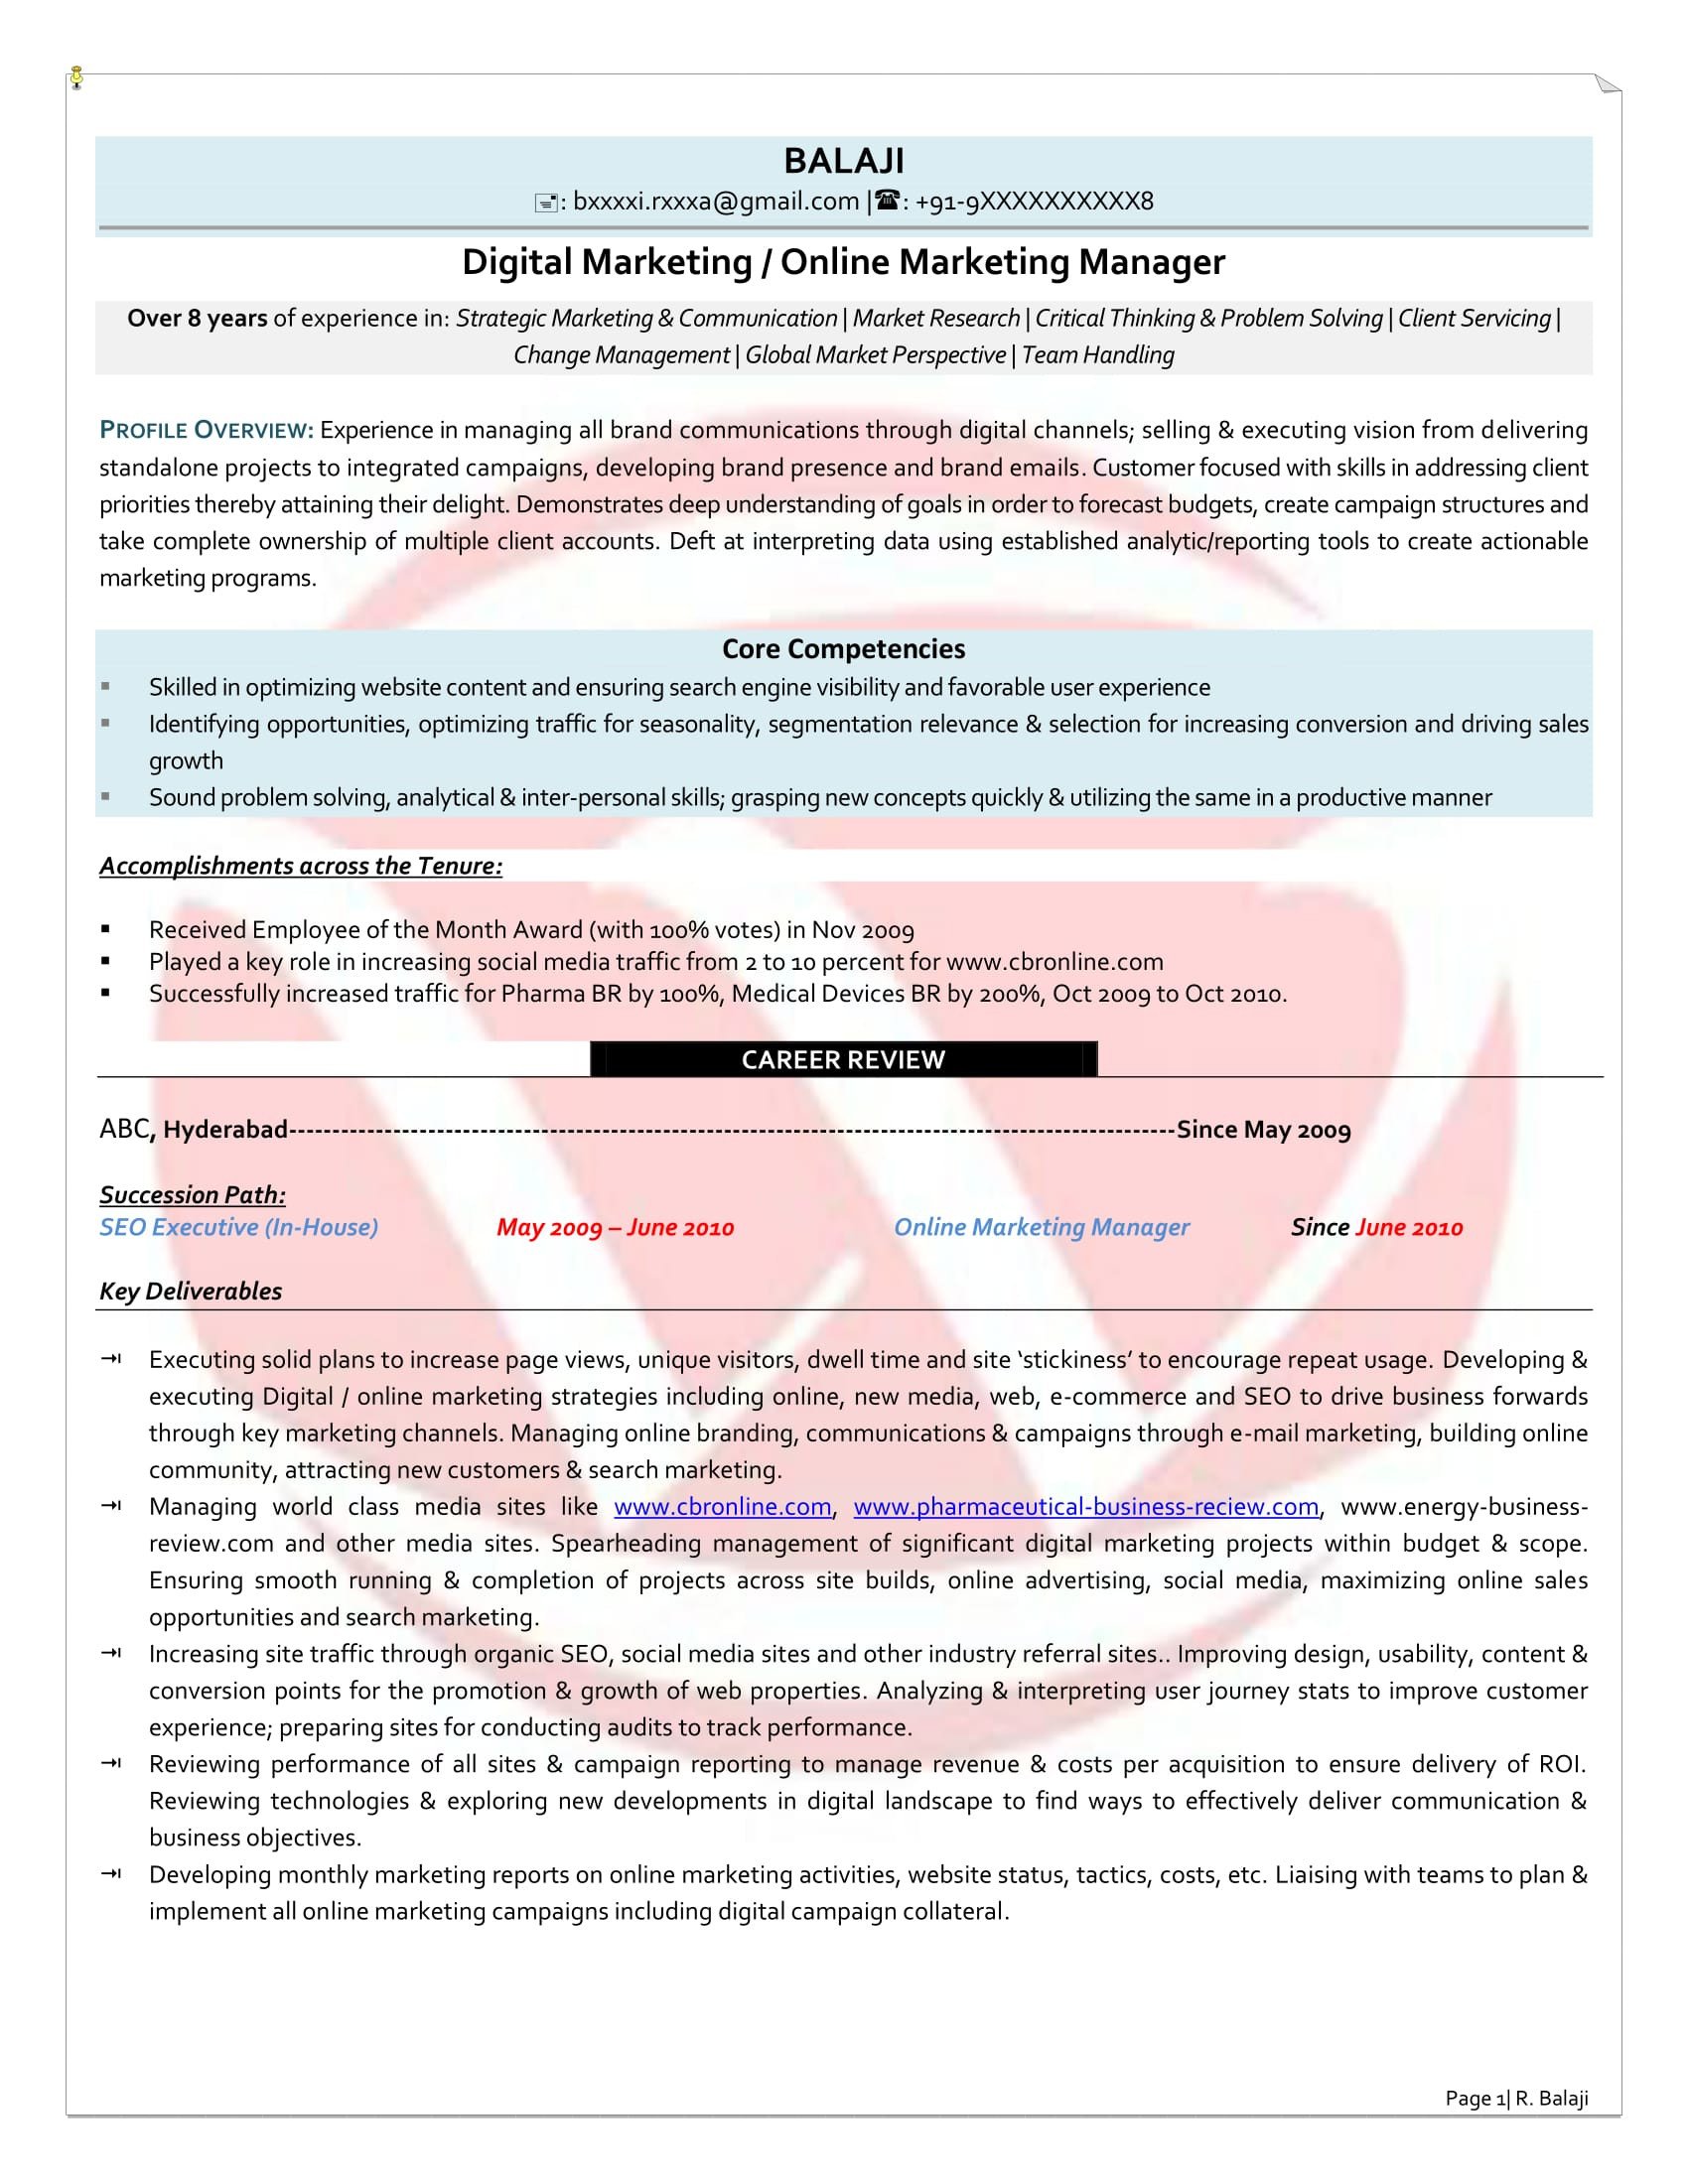 Digital Marketing Sample Resumes Download Resume Format